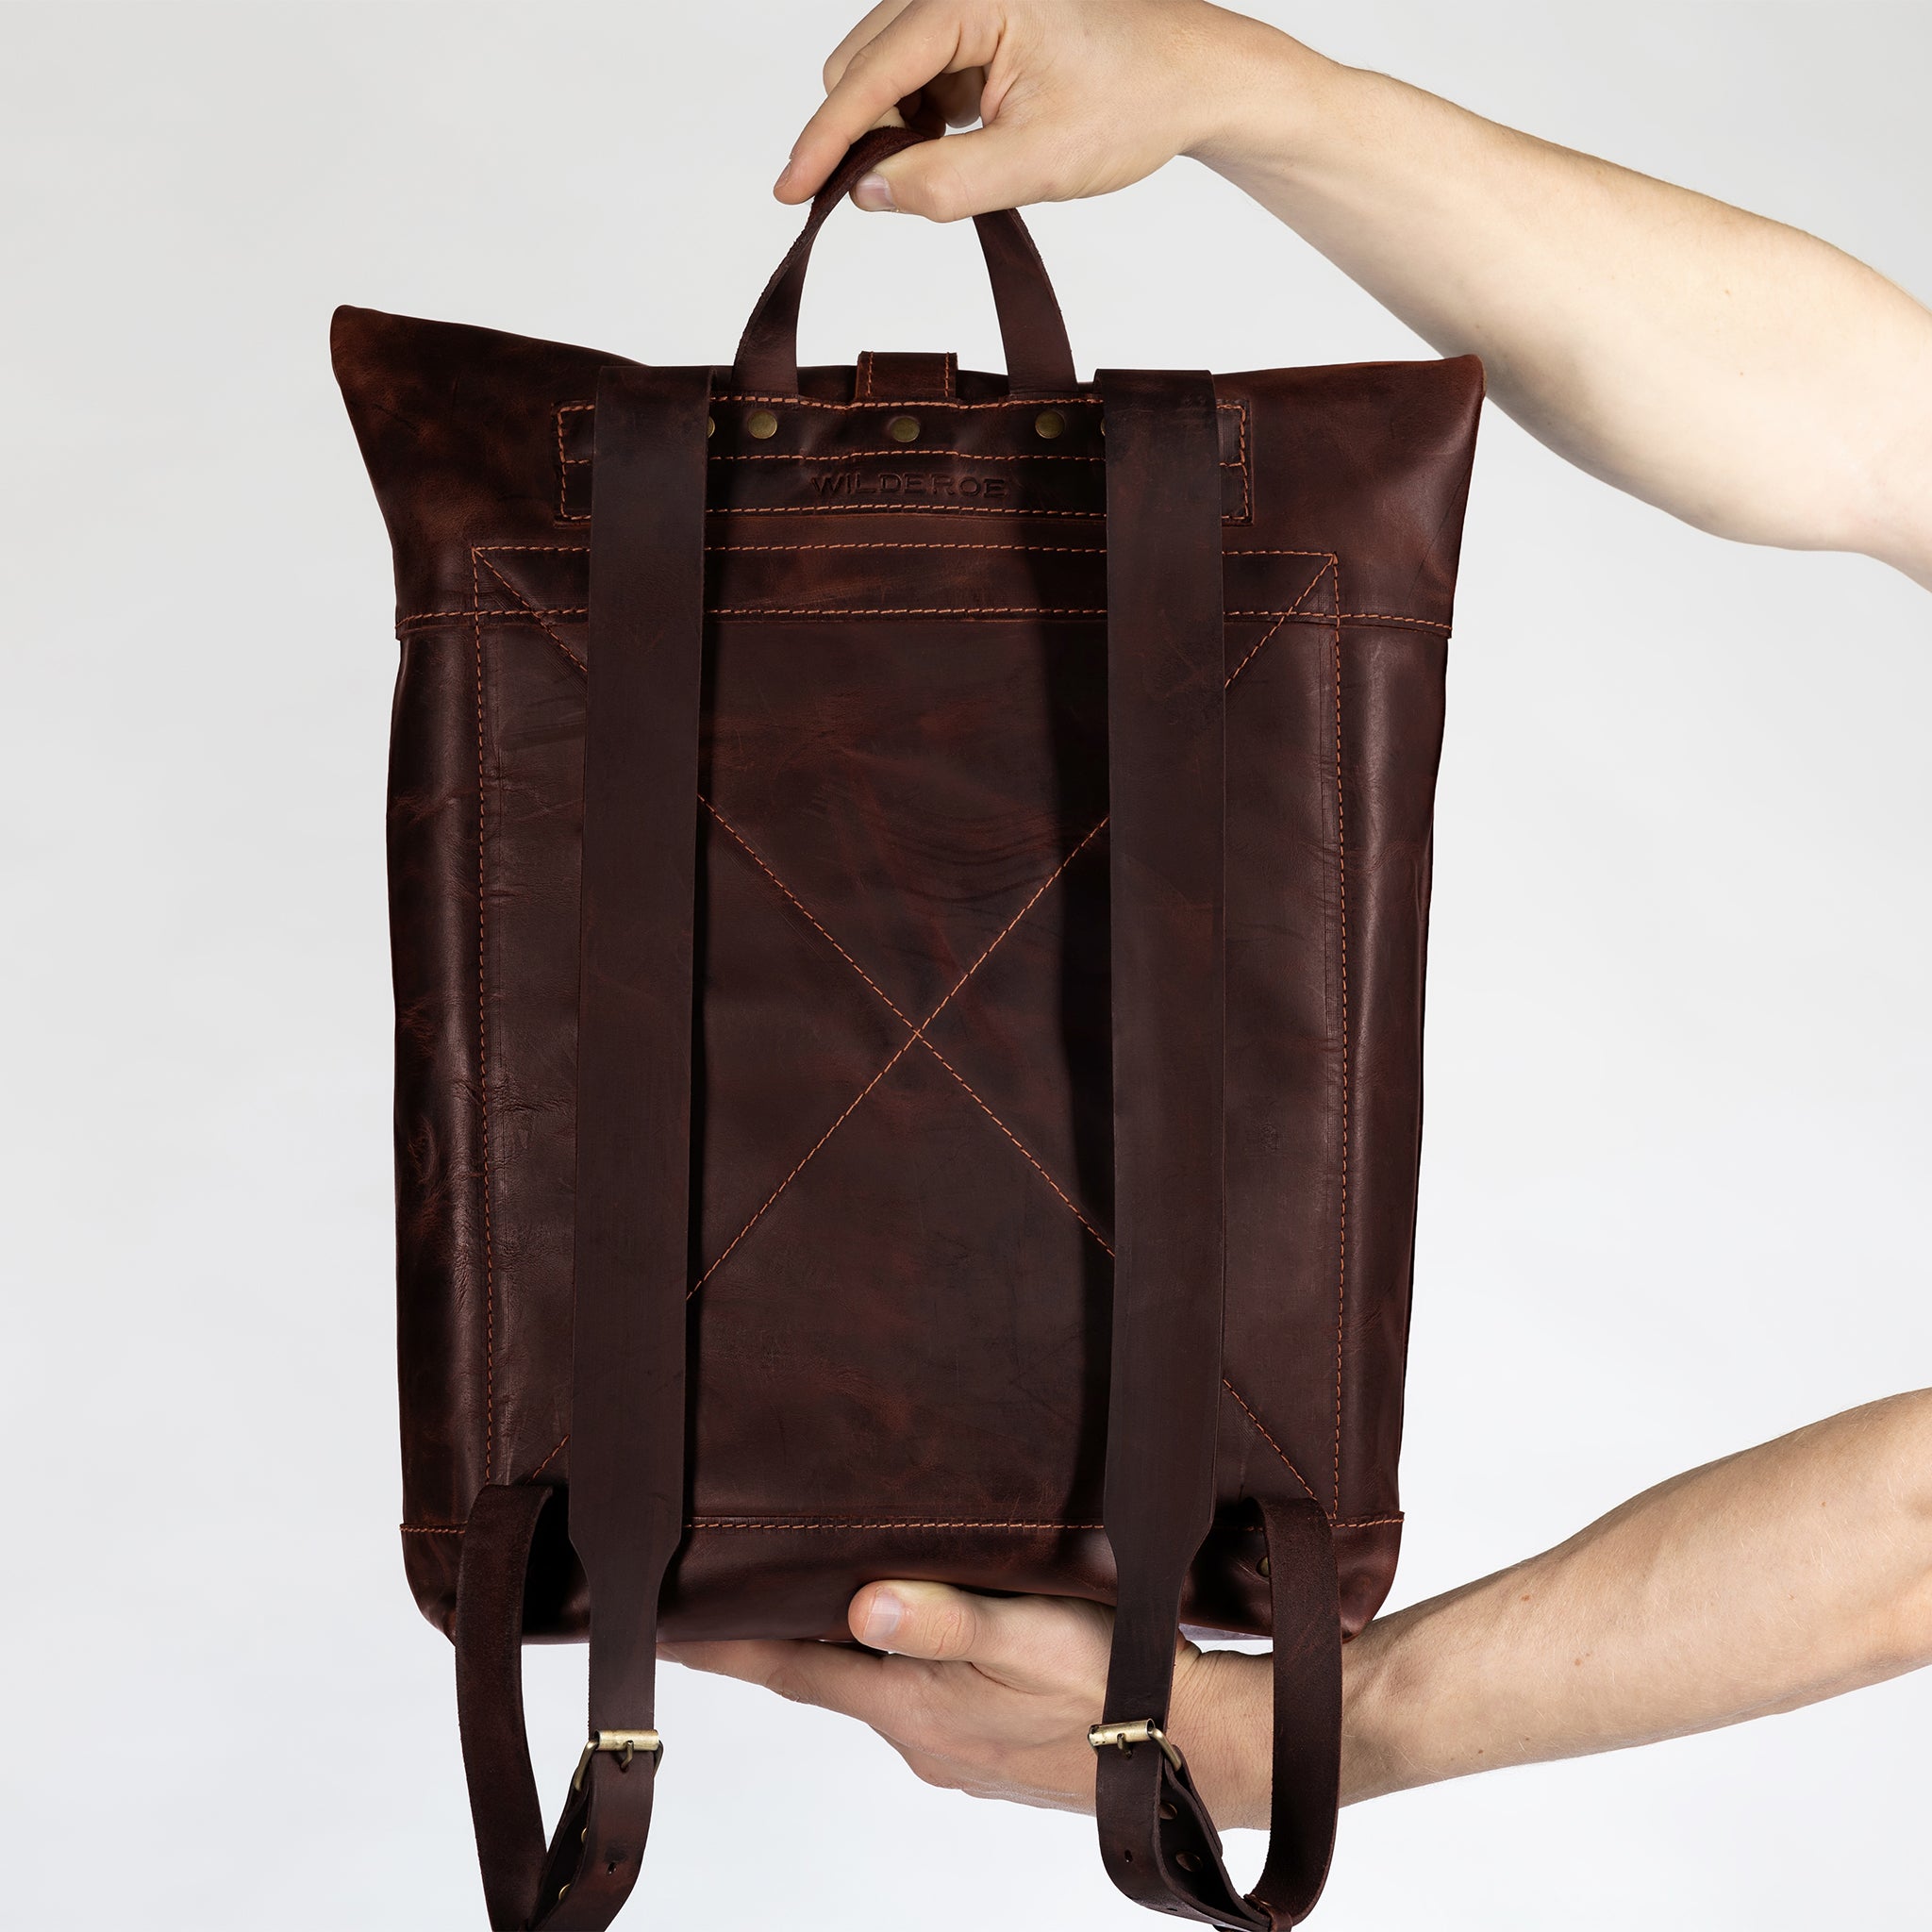 Leather backpack  - Wanderlust